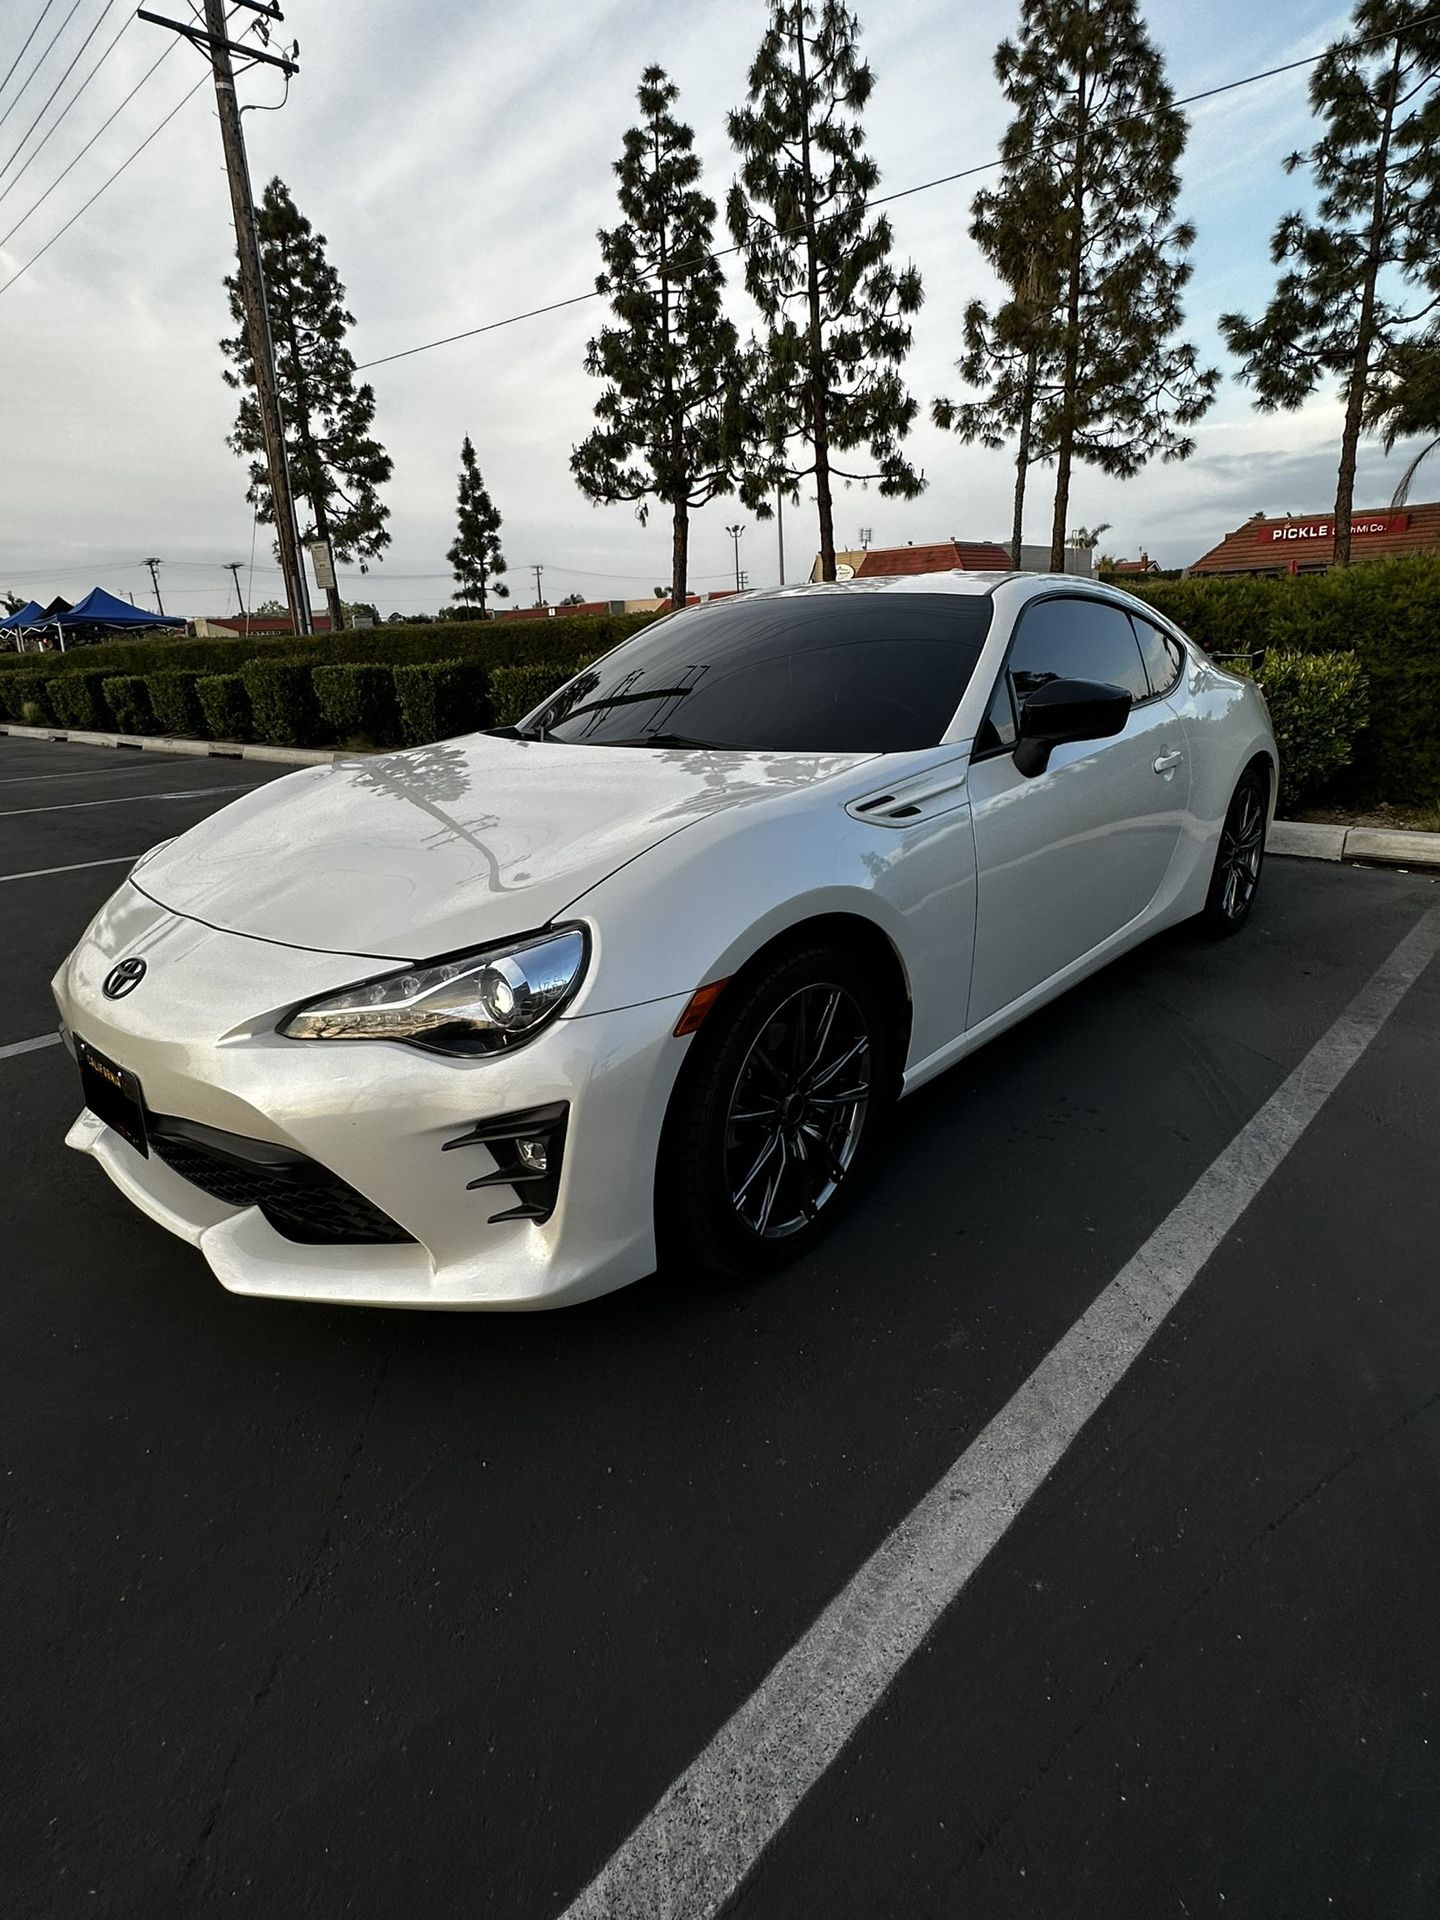 2017 Toyota 86